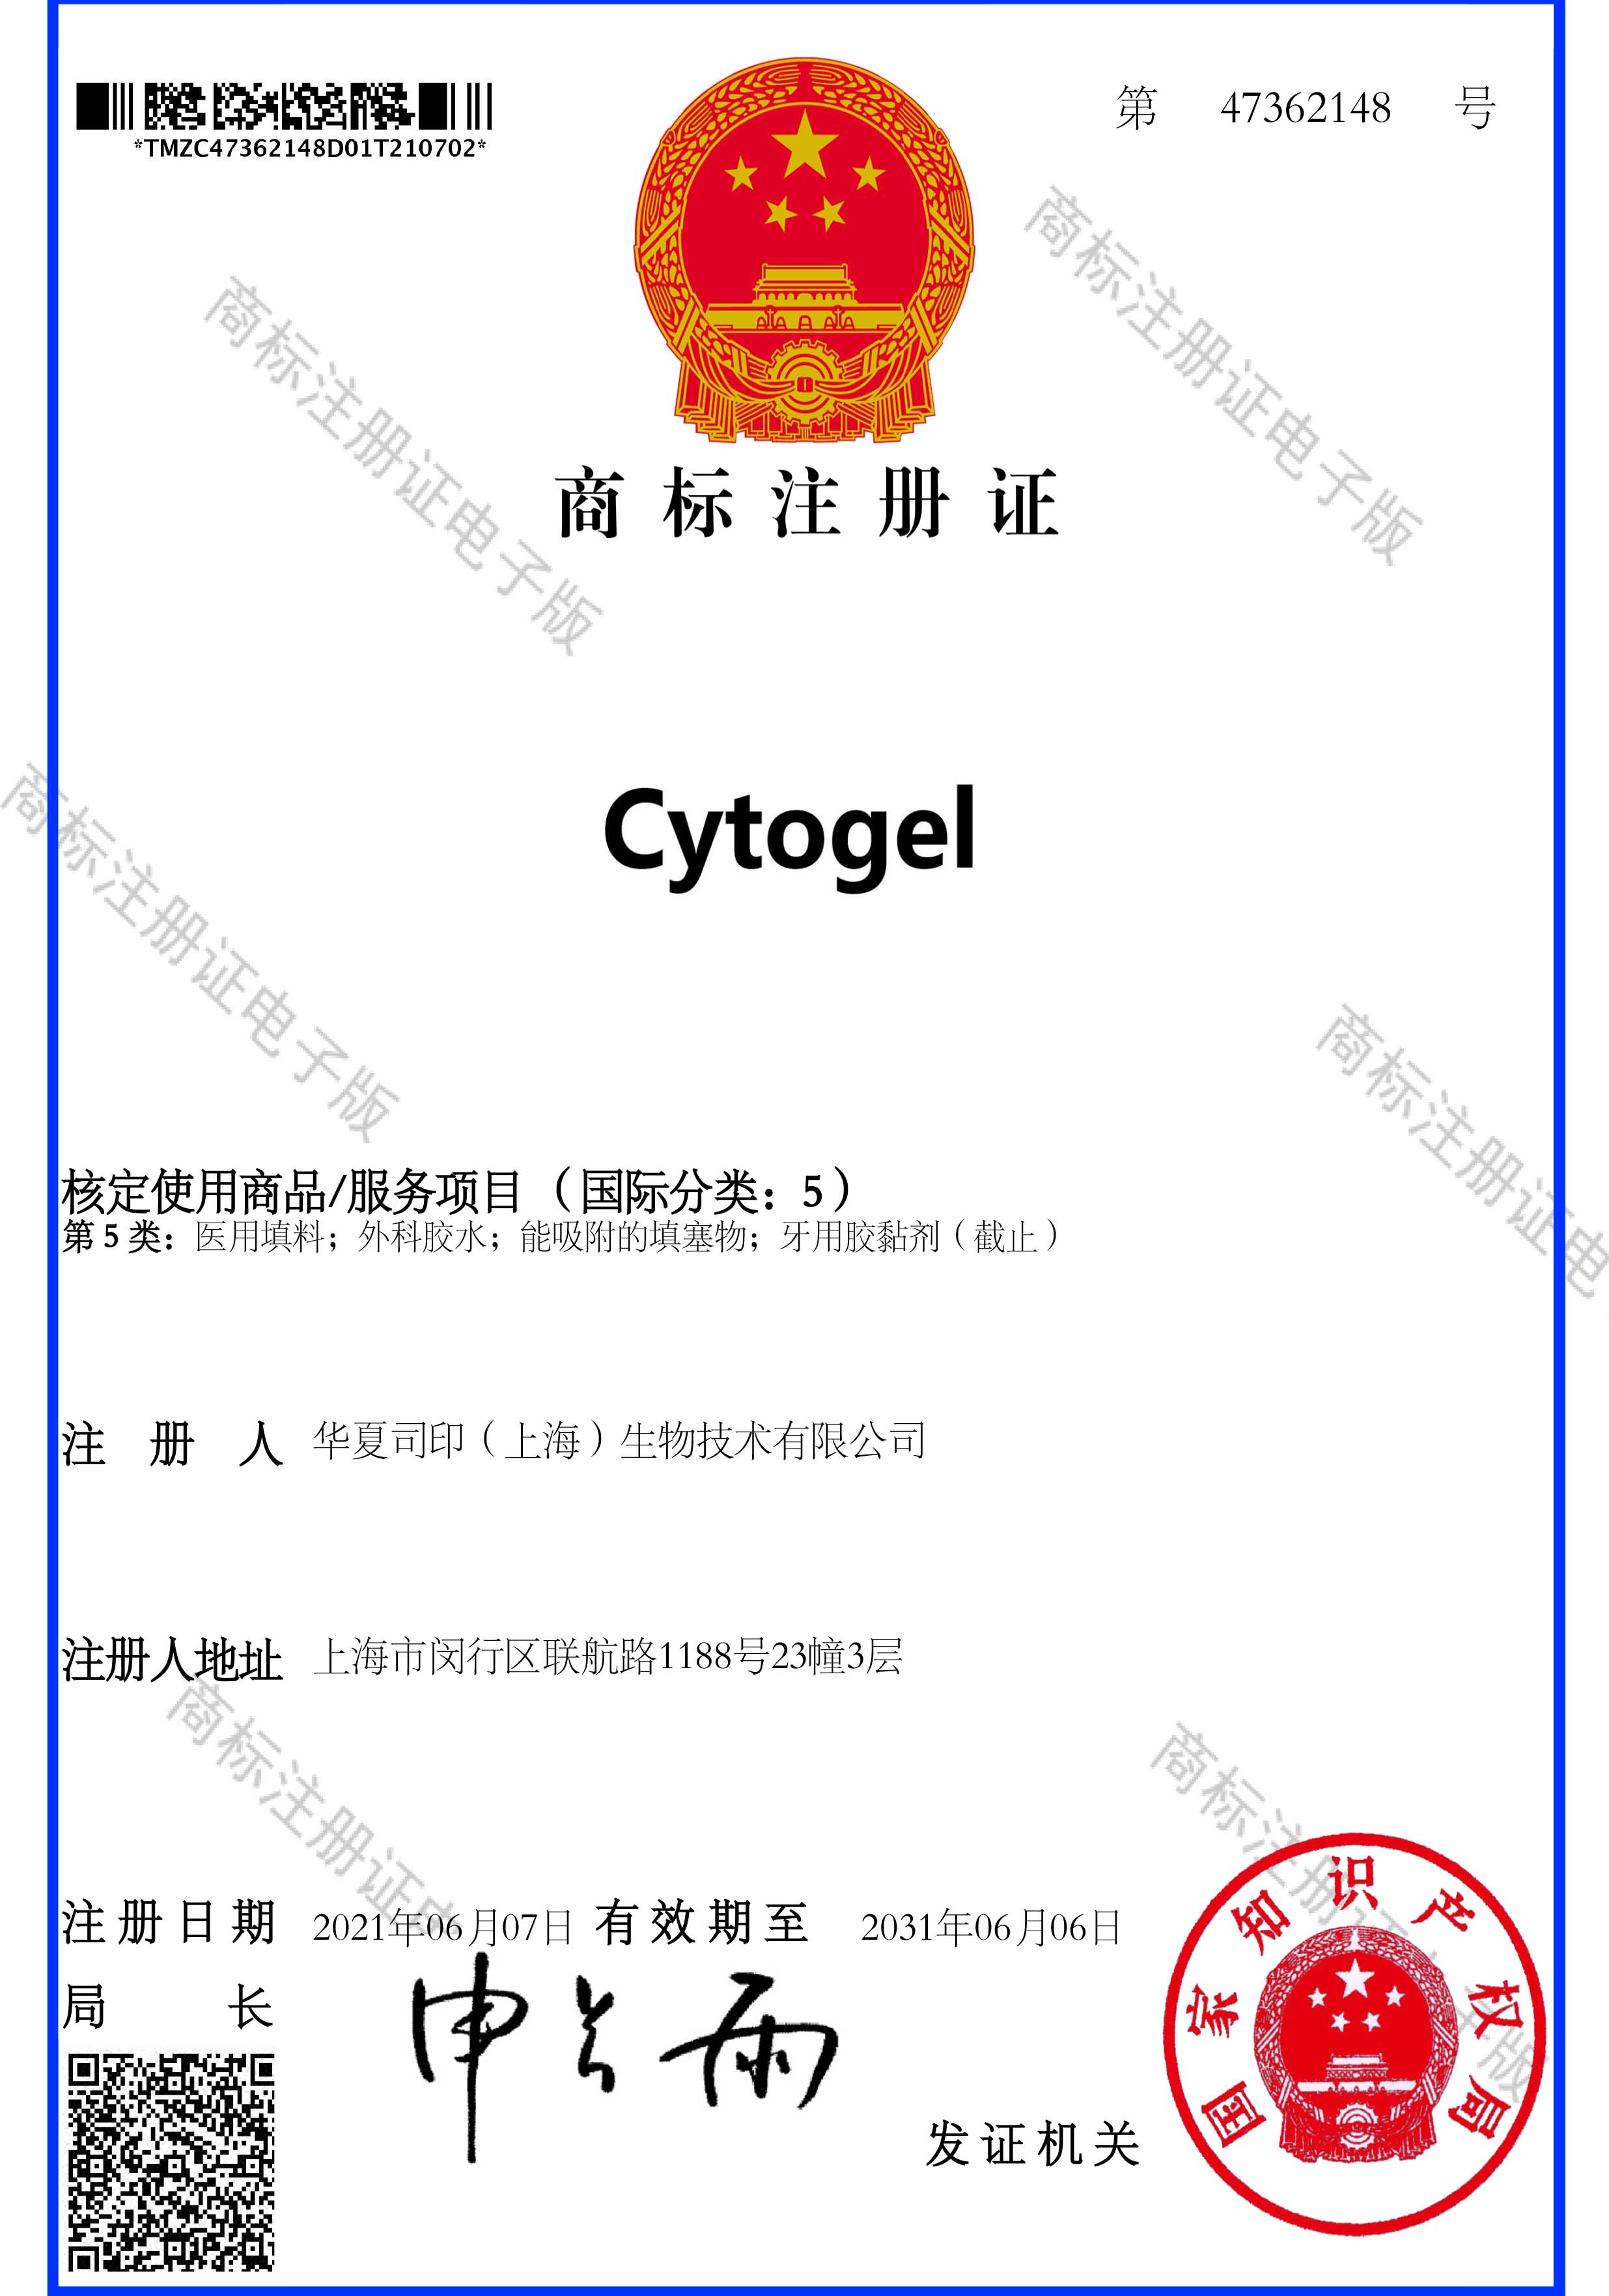 Cytogel trademark registration certificate